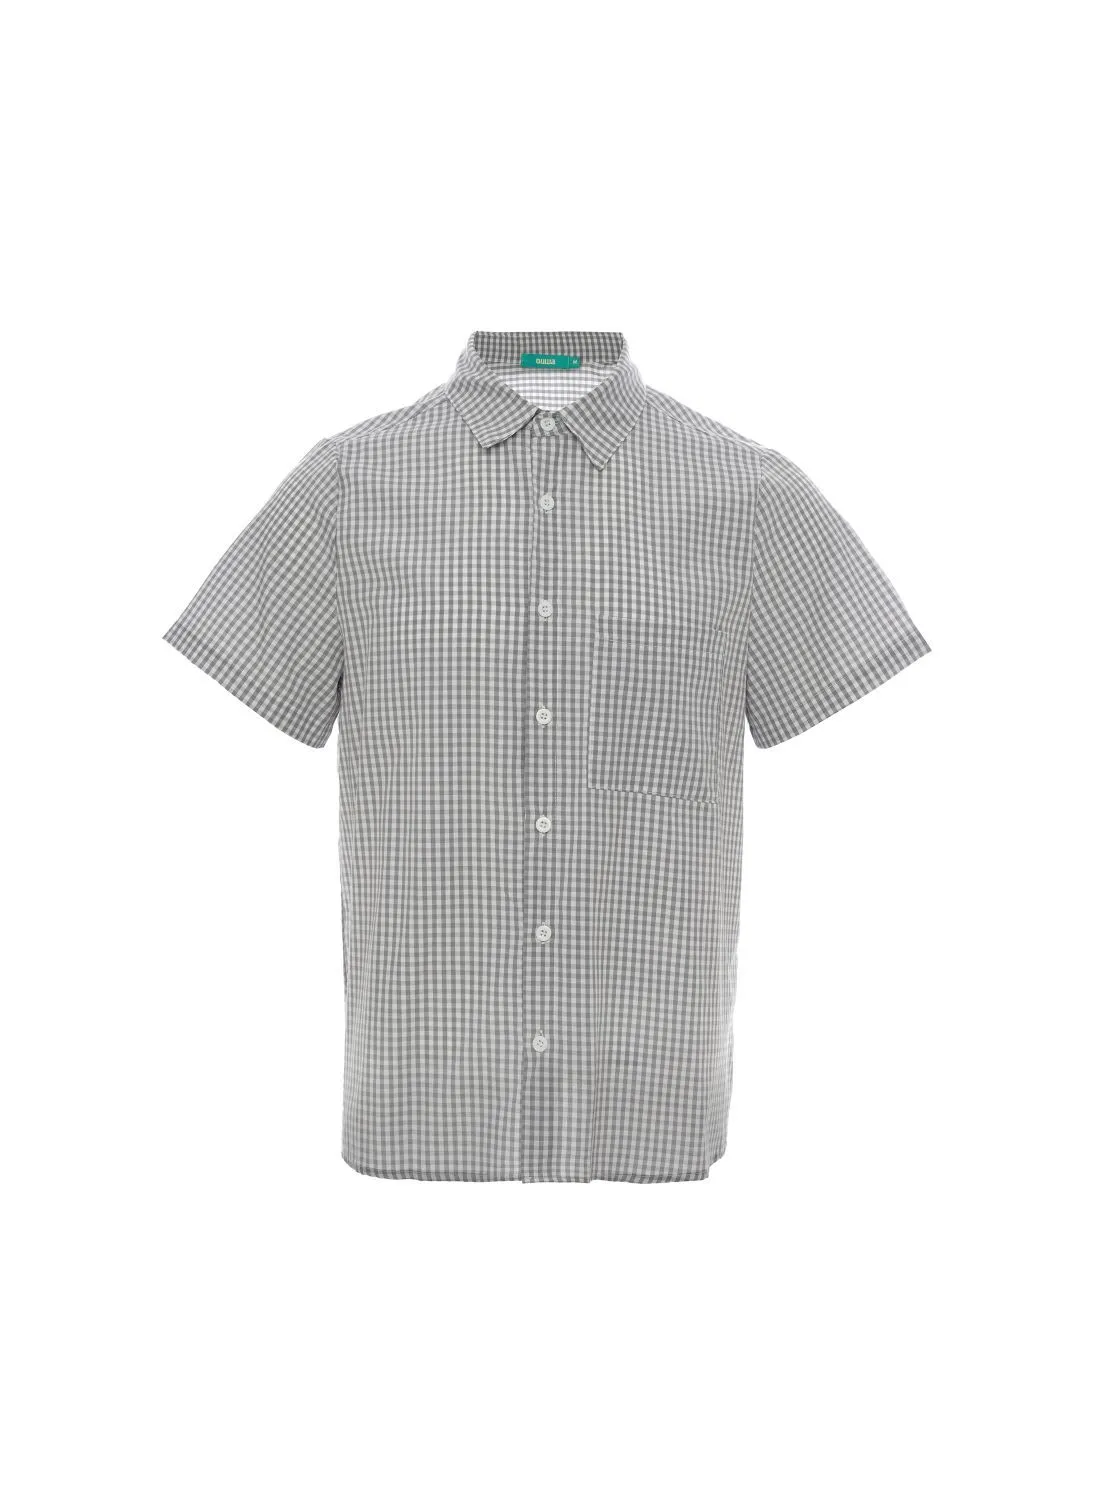 QUWA Men Classic Checkered Short Sleeve Shirt Grey